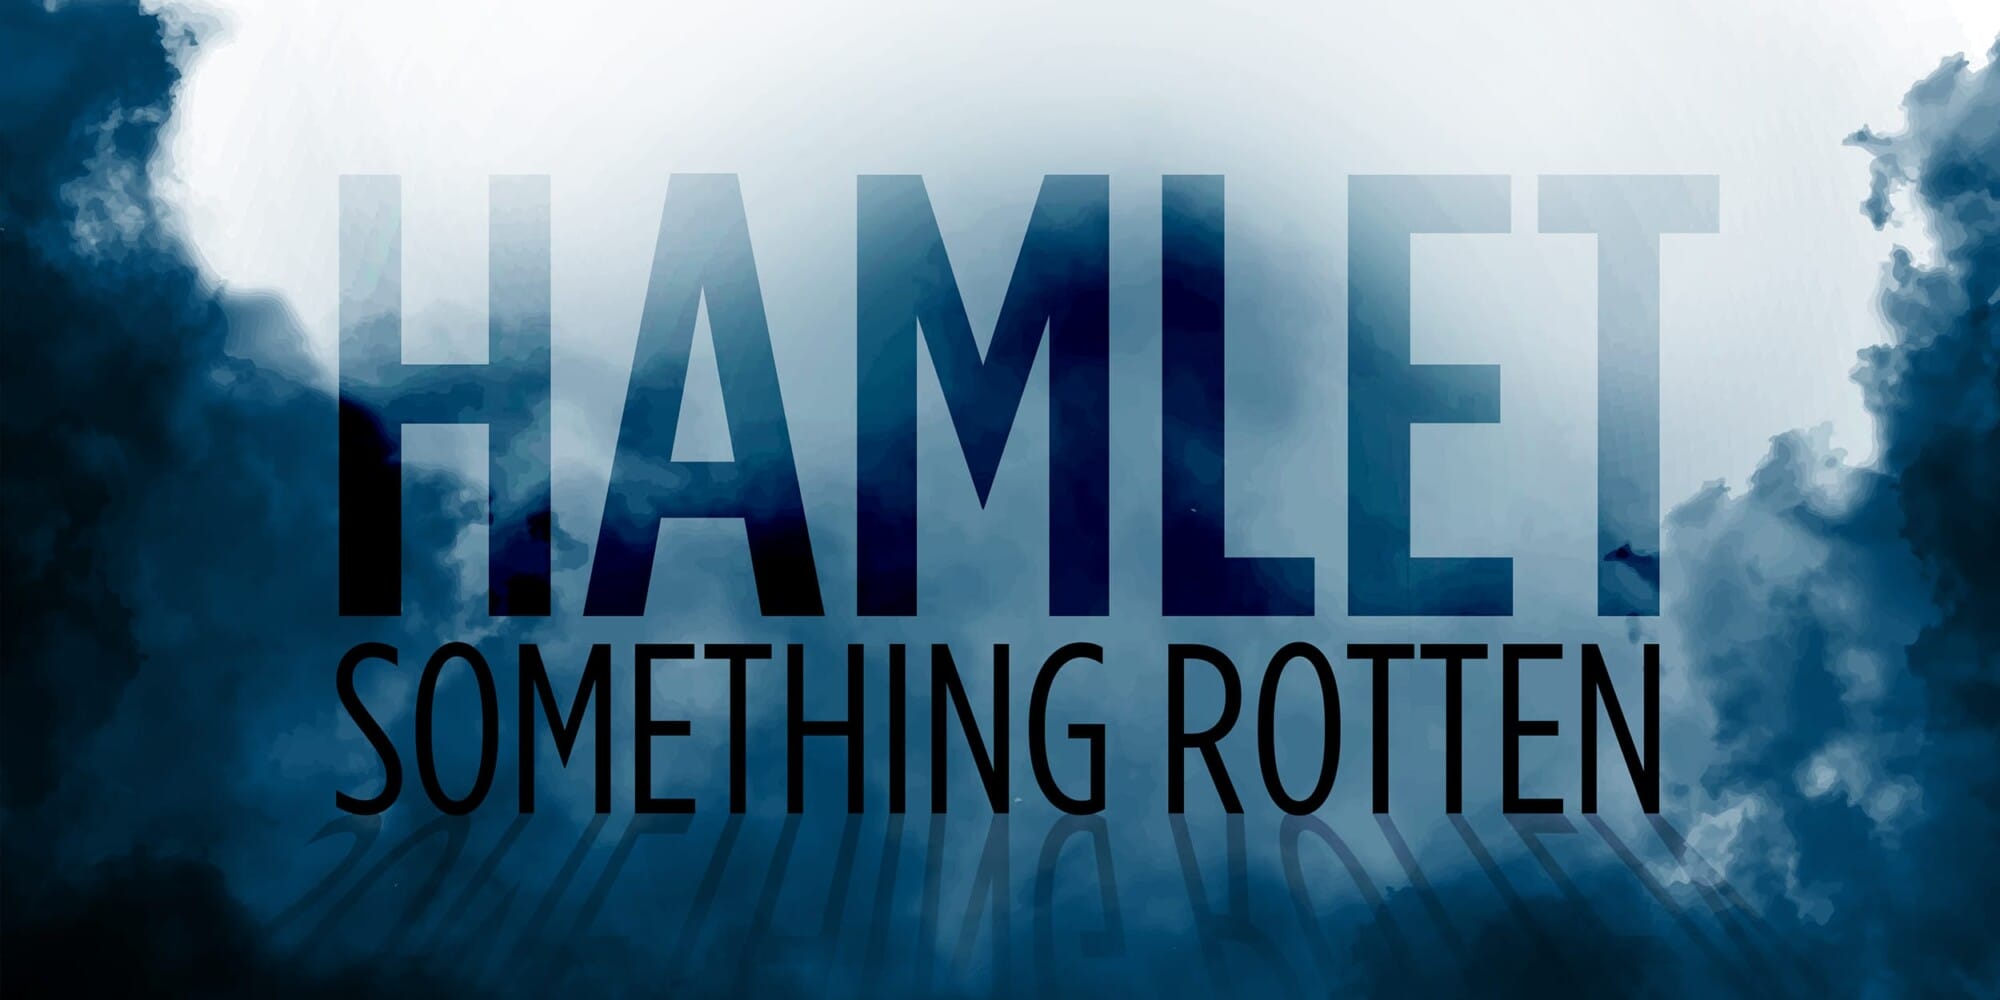 Hamlet: Something Rotten